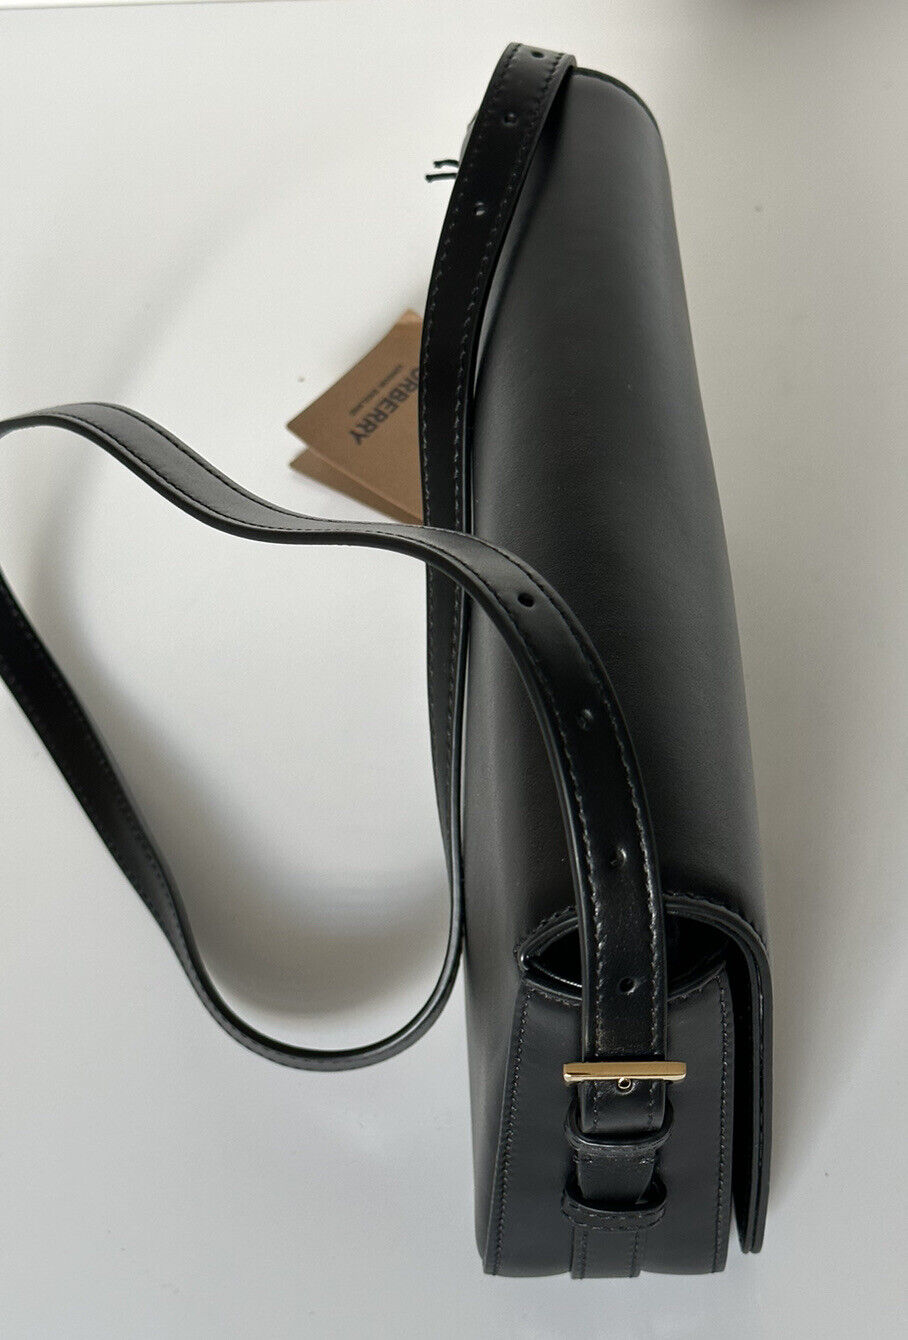 NWT Burberry Grace Mini Leather Cross Body Bag Black 3980825 80670901 Italy